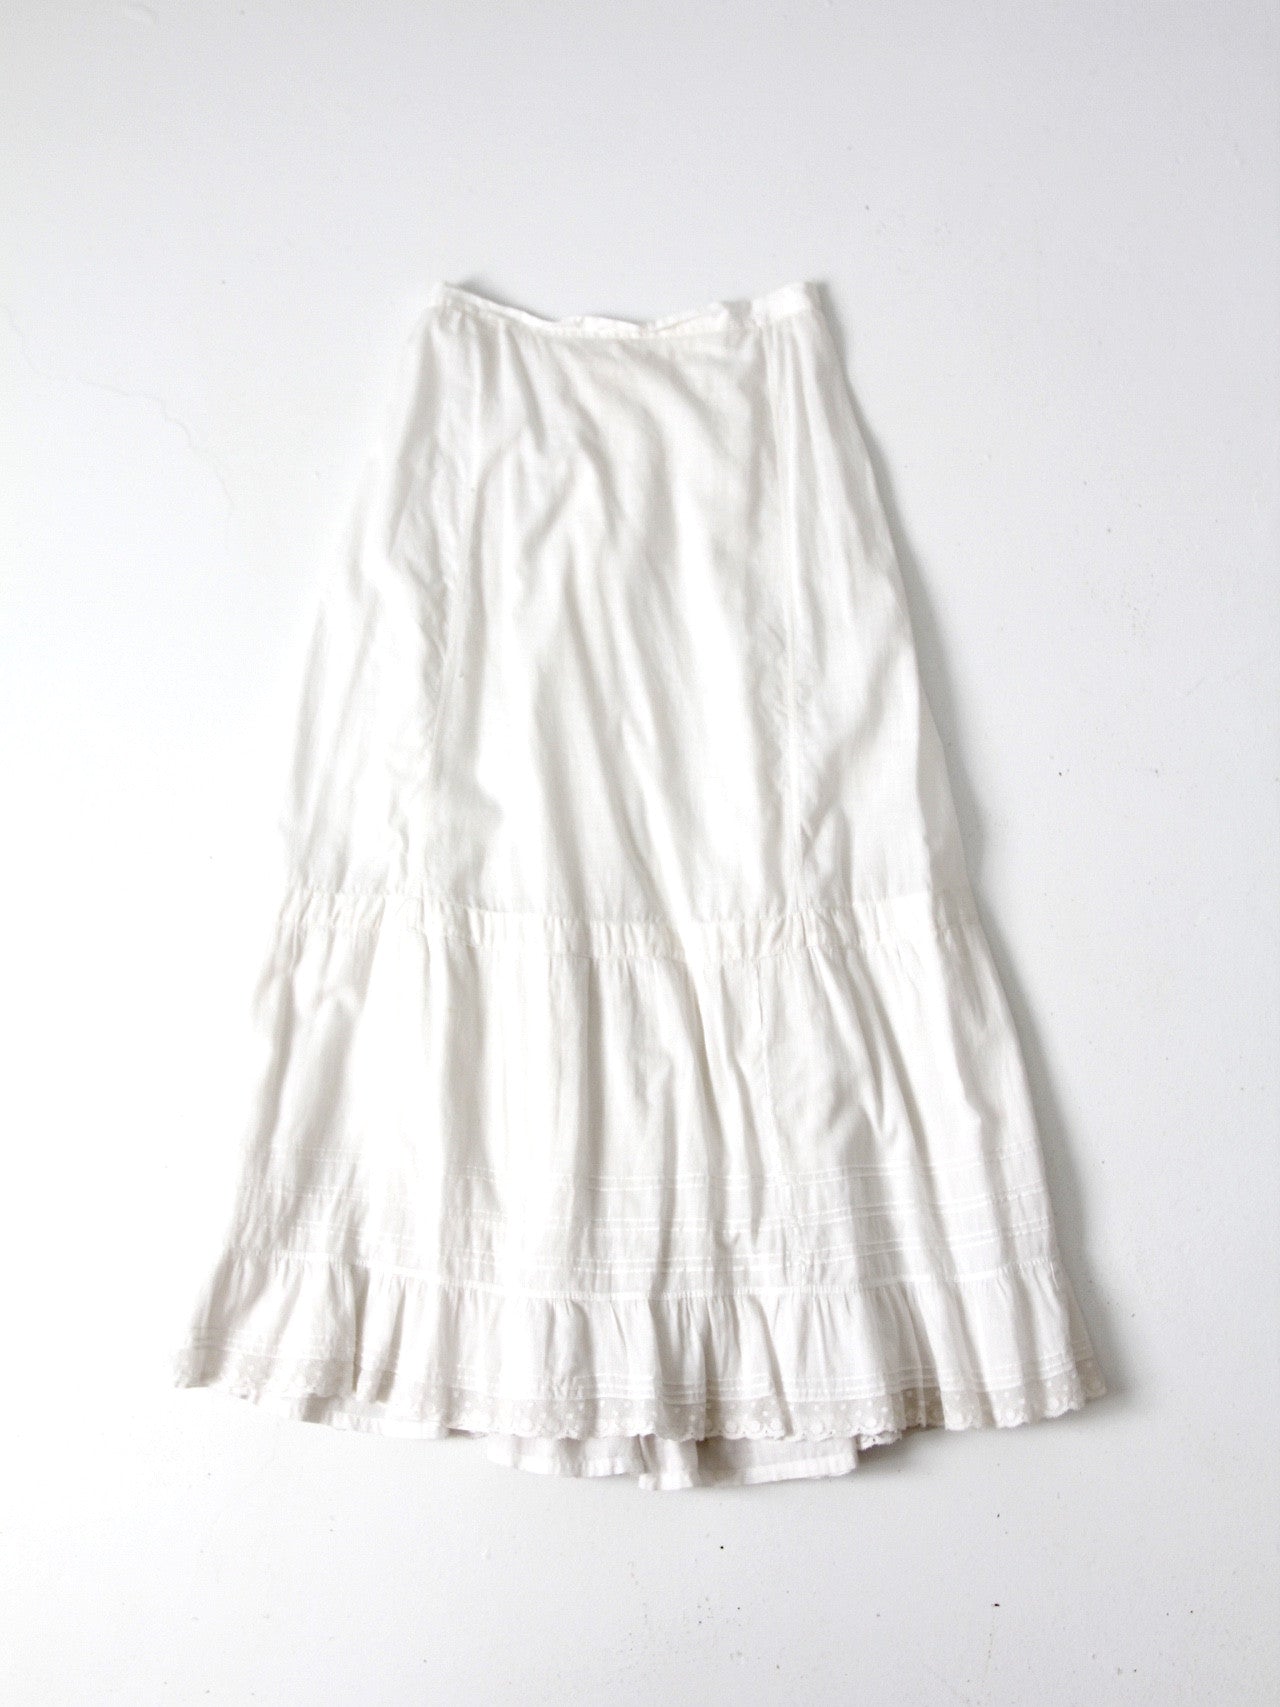 Edwardian petticoat antique skirt